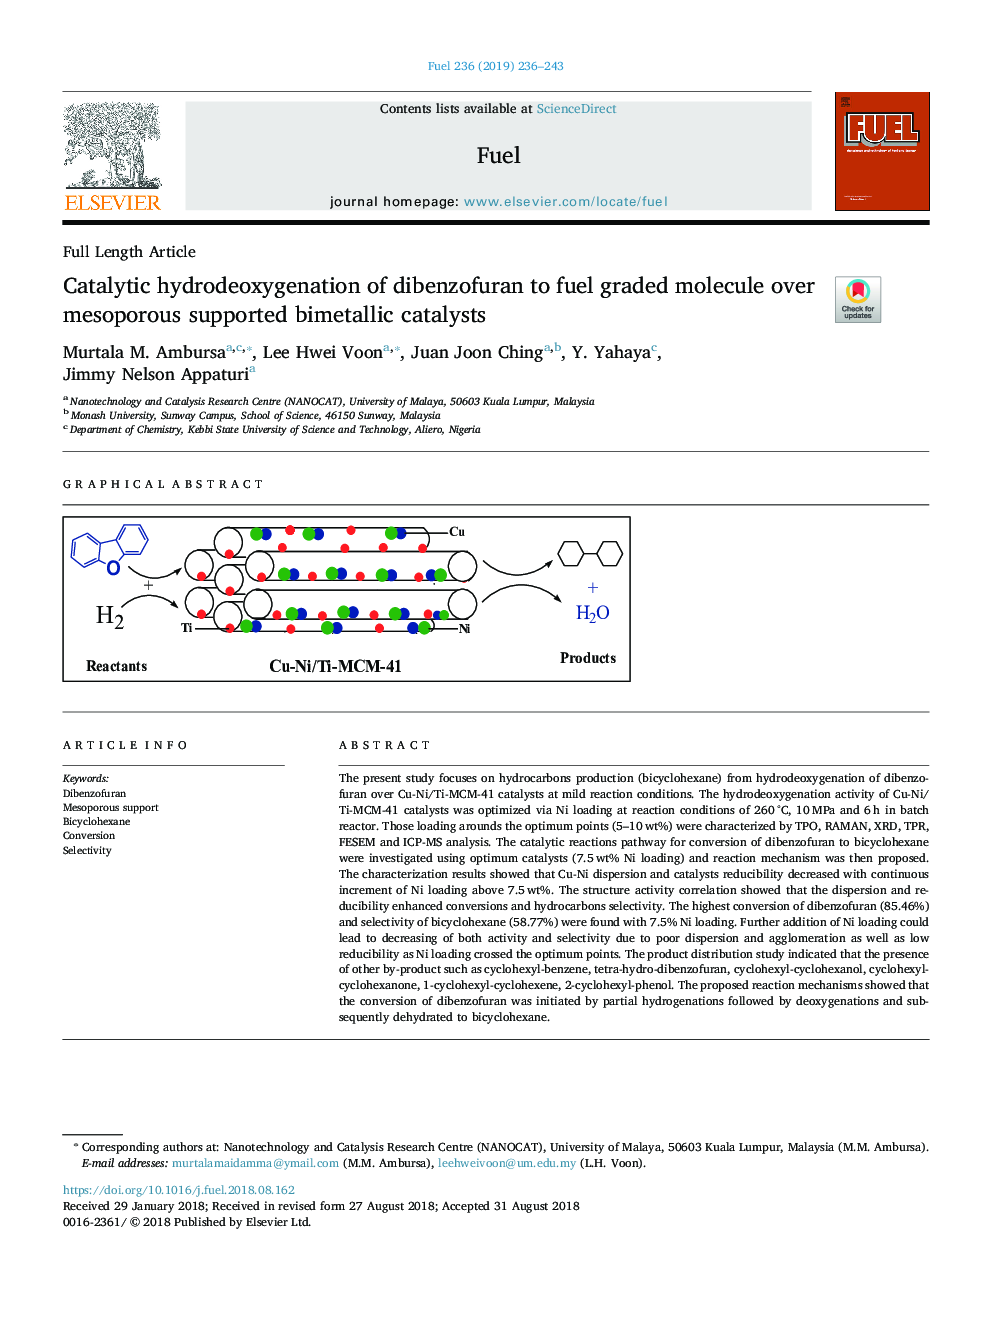 Catalytic hydrodeoxygenation of dibenzofuran to fuel graded molecule over mesoporous supported bimetallic catalysts